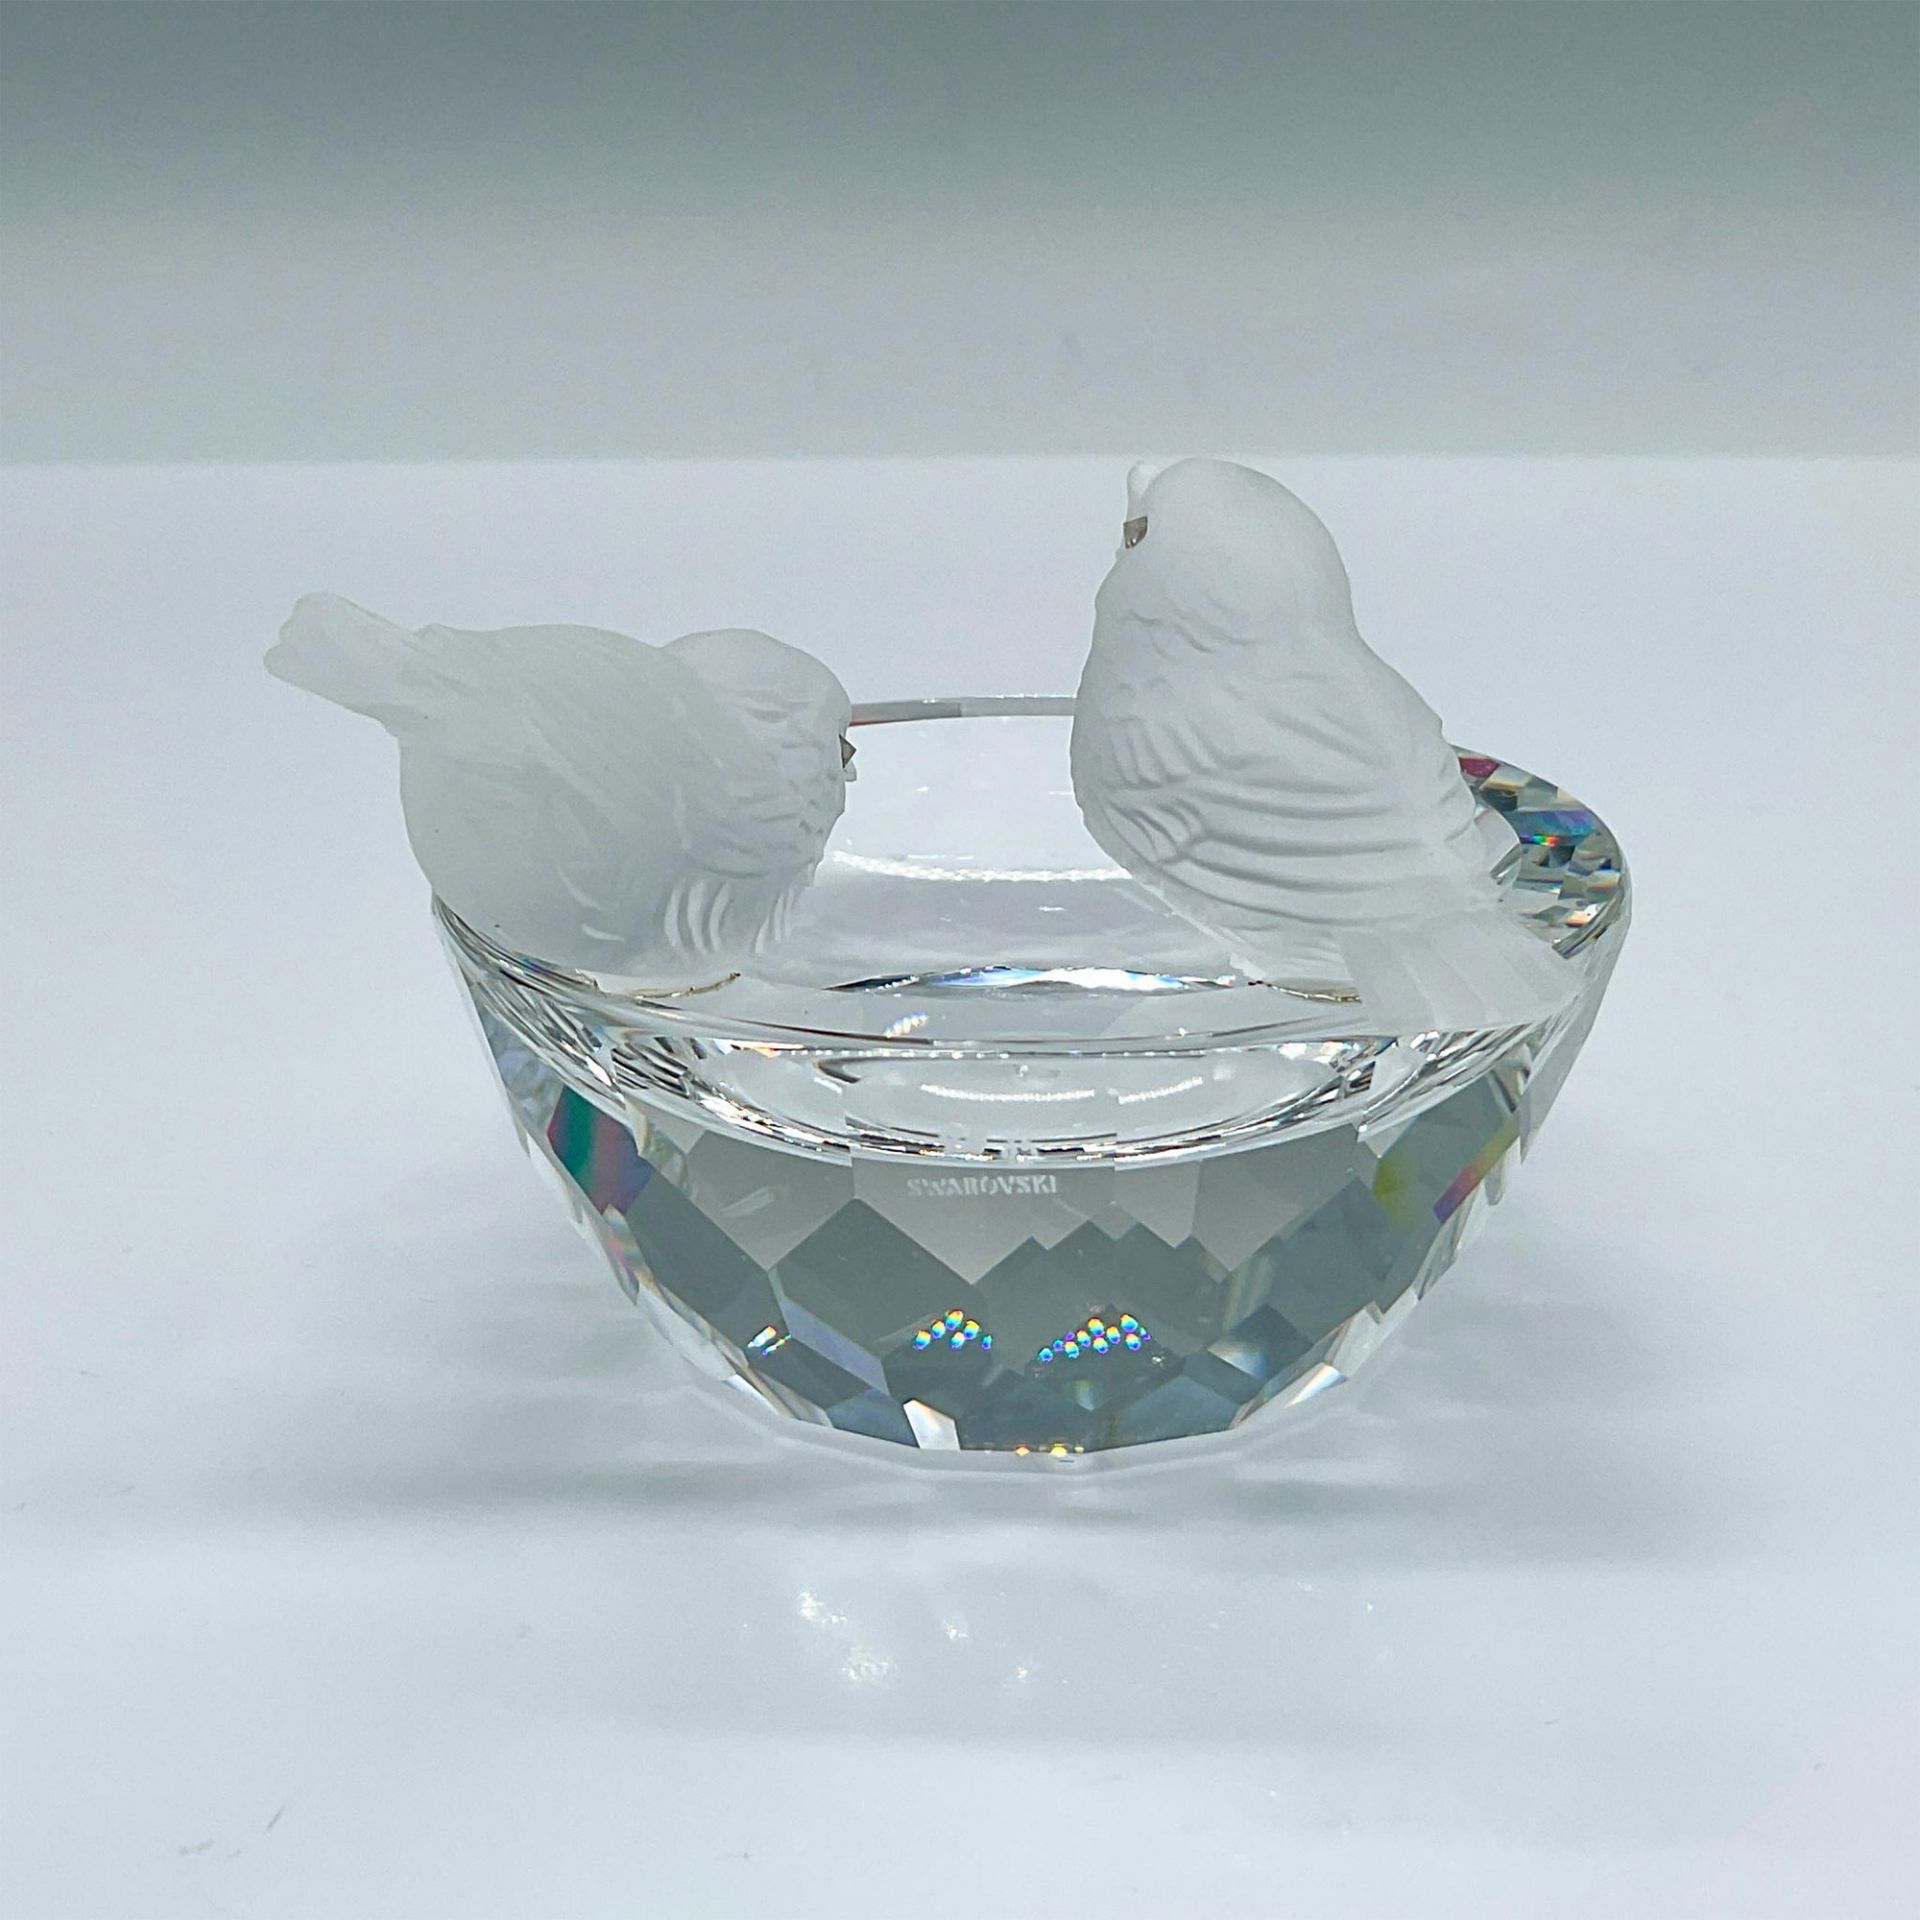 Swarovski Silver Crystal Figurine, Bird Bath - Image 4 of 4